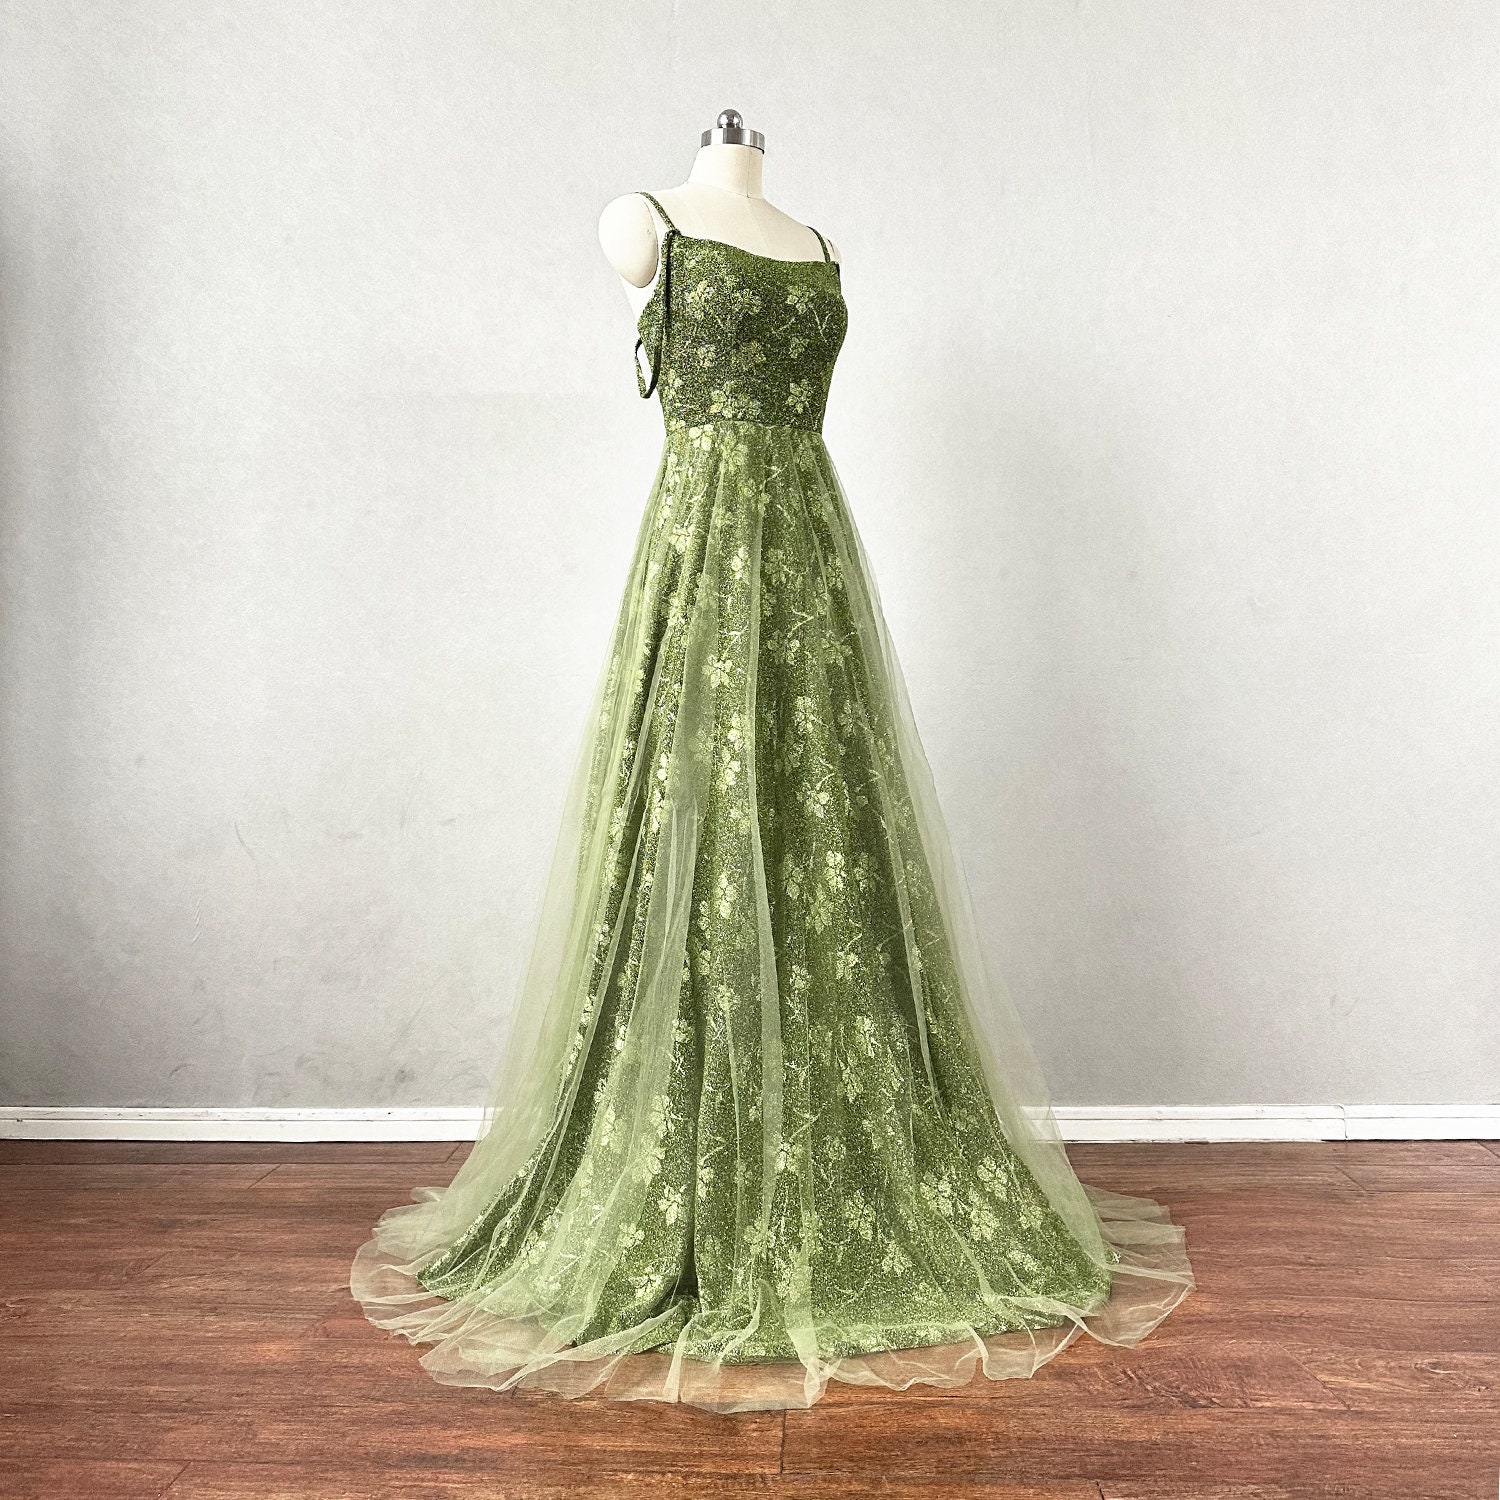 Moss Green Floral Prom Dress Corset Back Tulle Overlay Skirt - Etsy